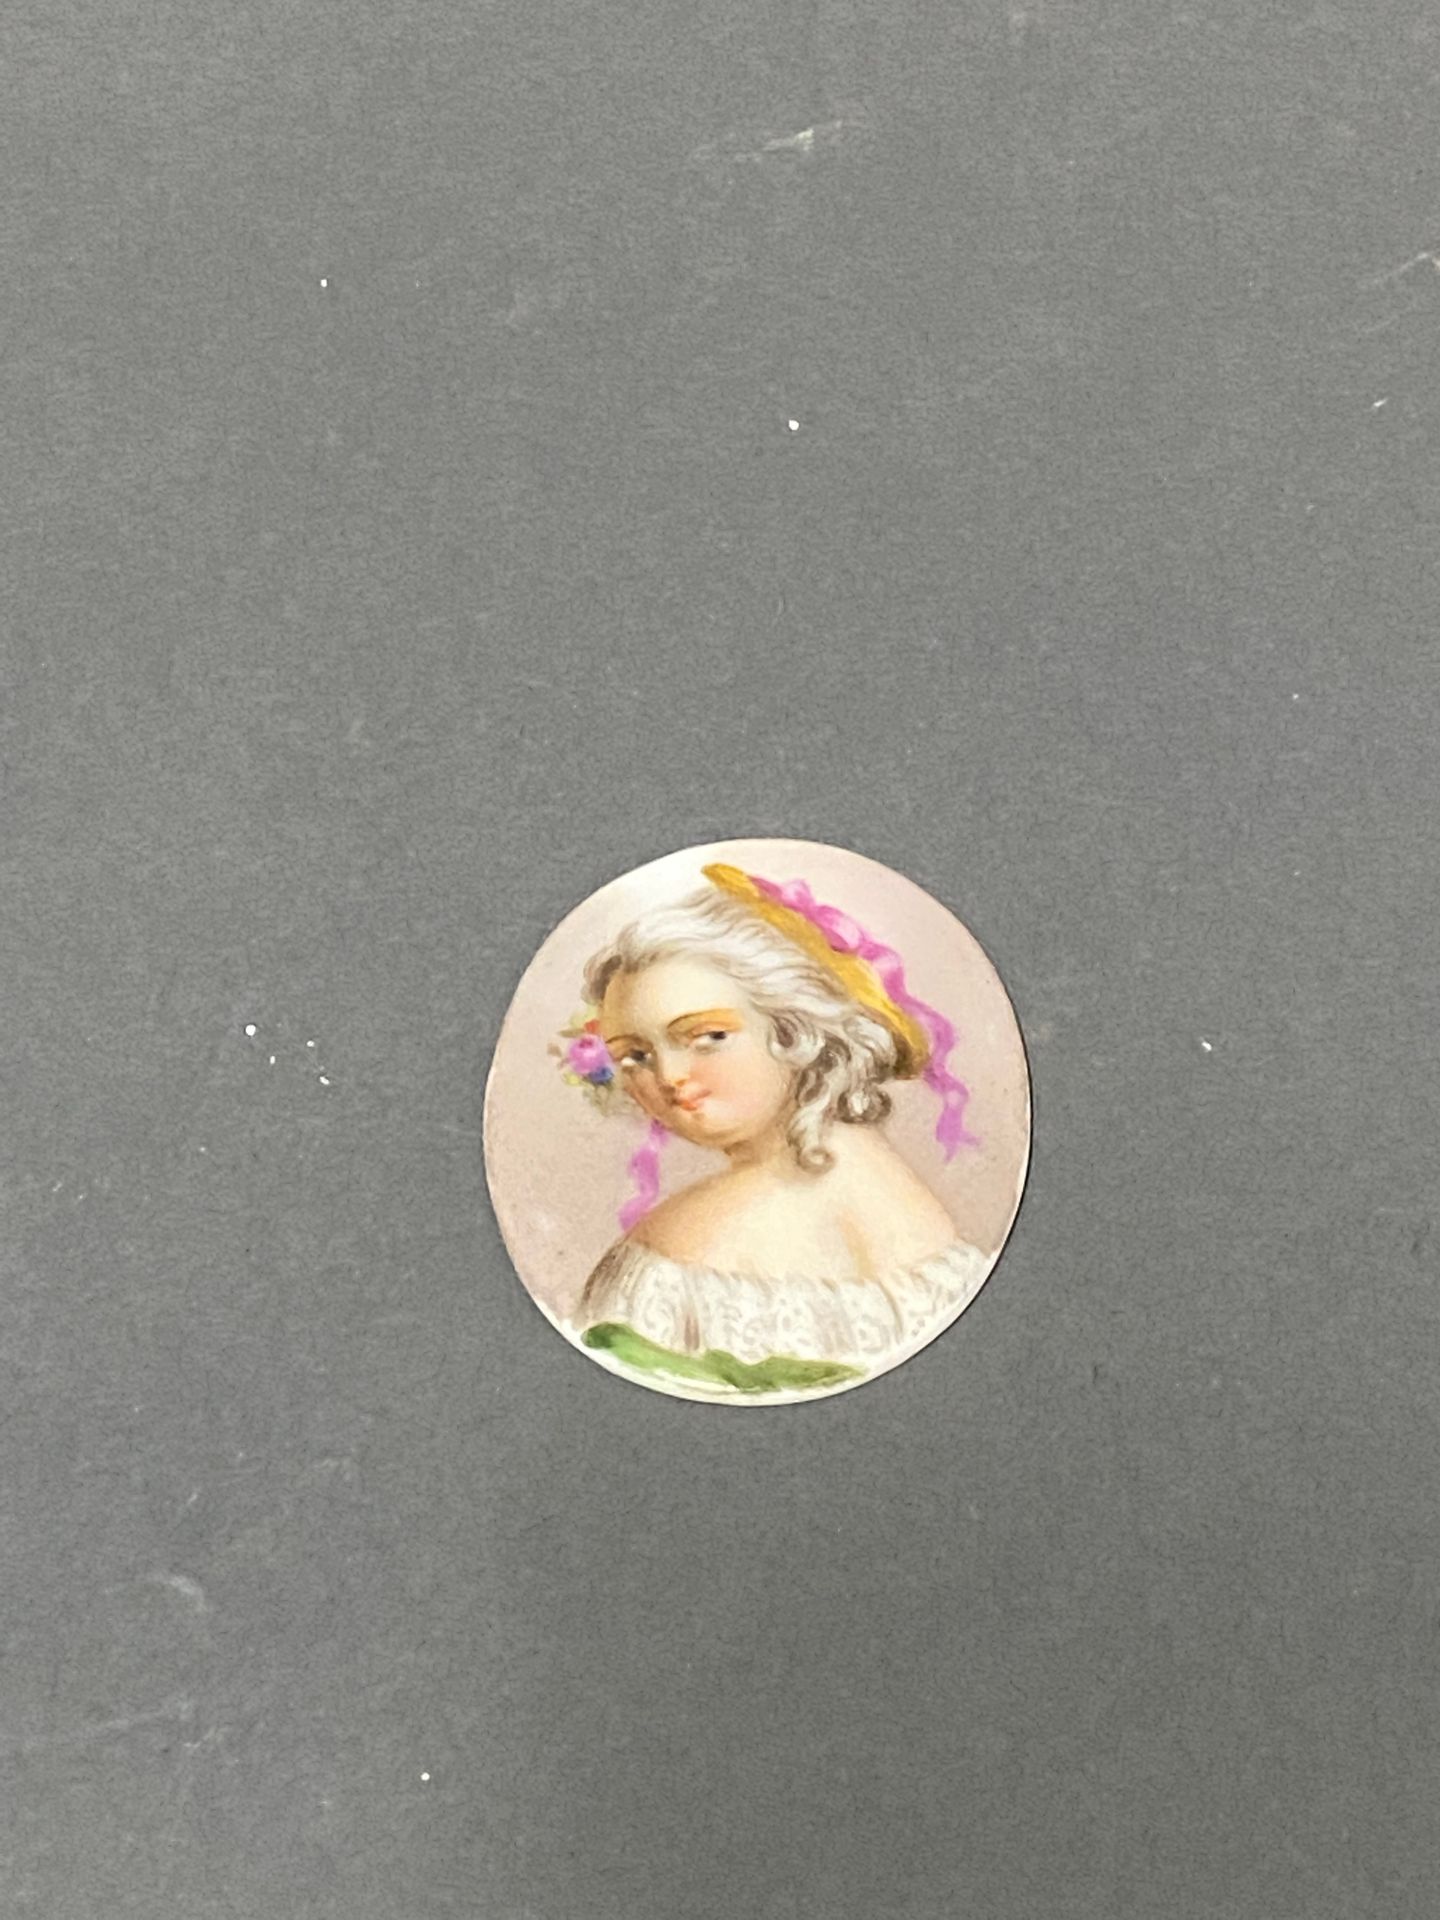 Null "Retrato de un niño

Miniatura en plato de porcelana 

4,3 x 3,4 cm